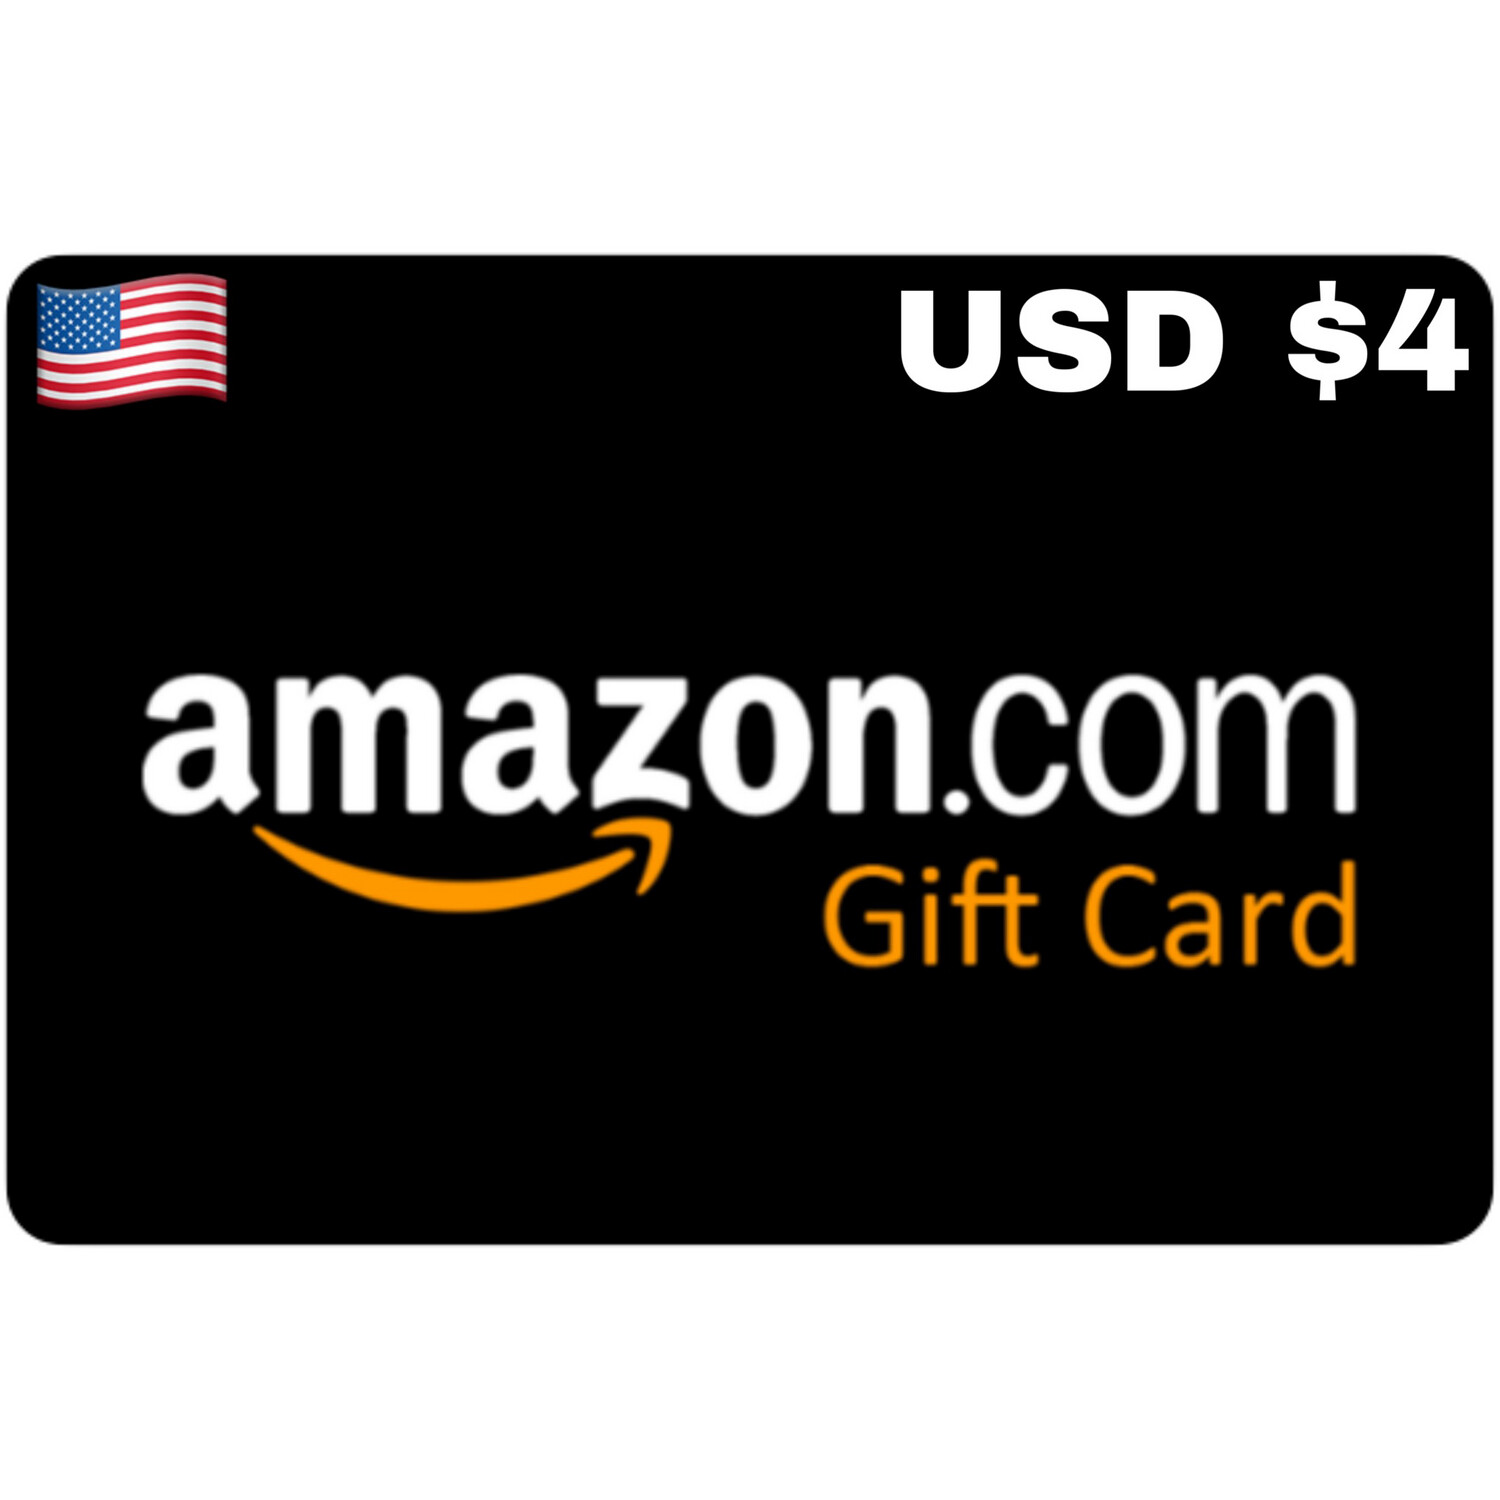 Amazon.com Gift Card USD $4